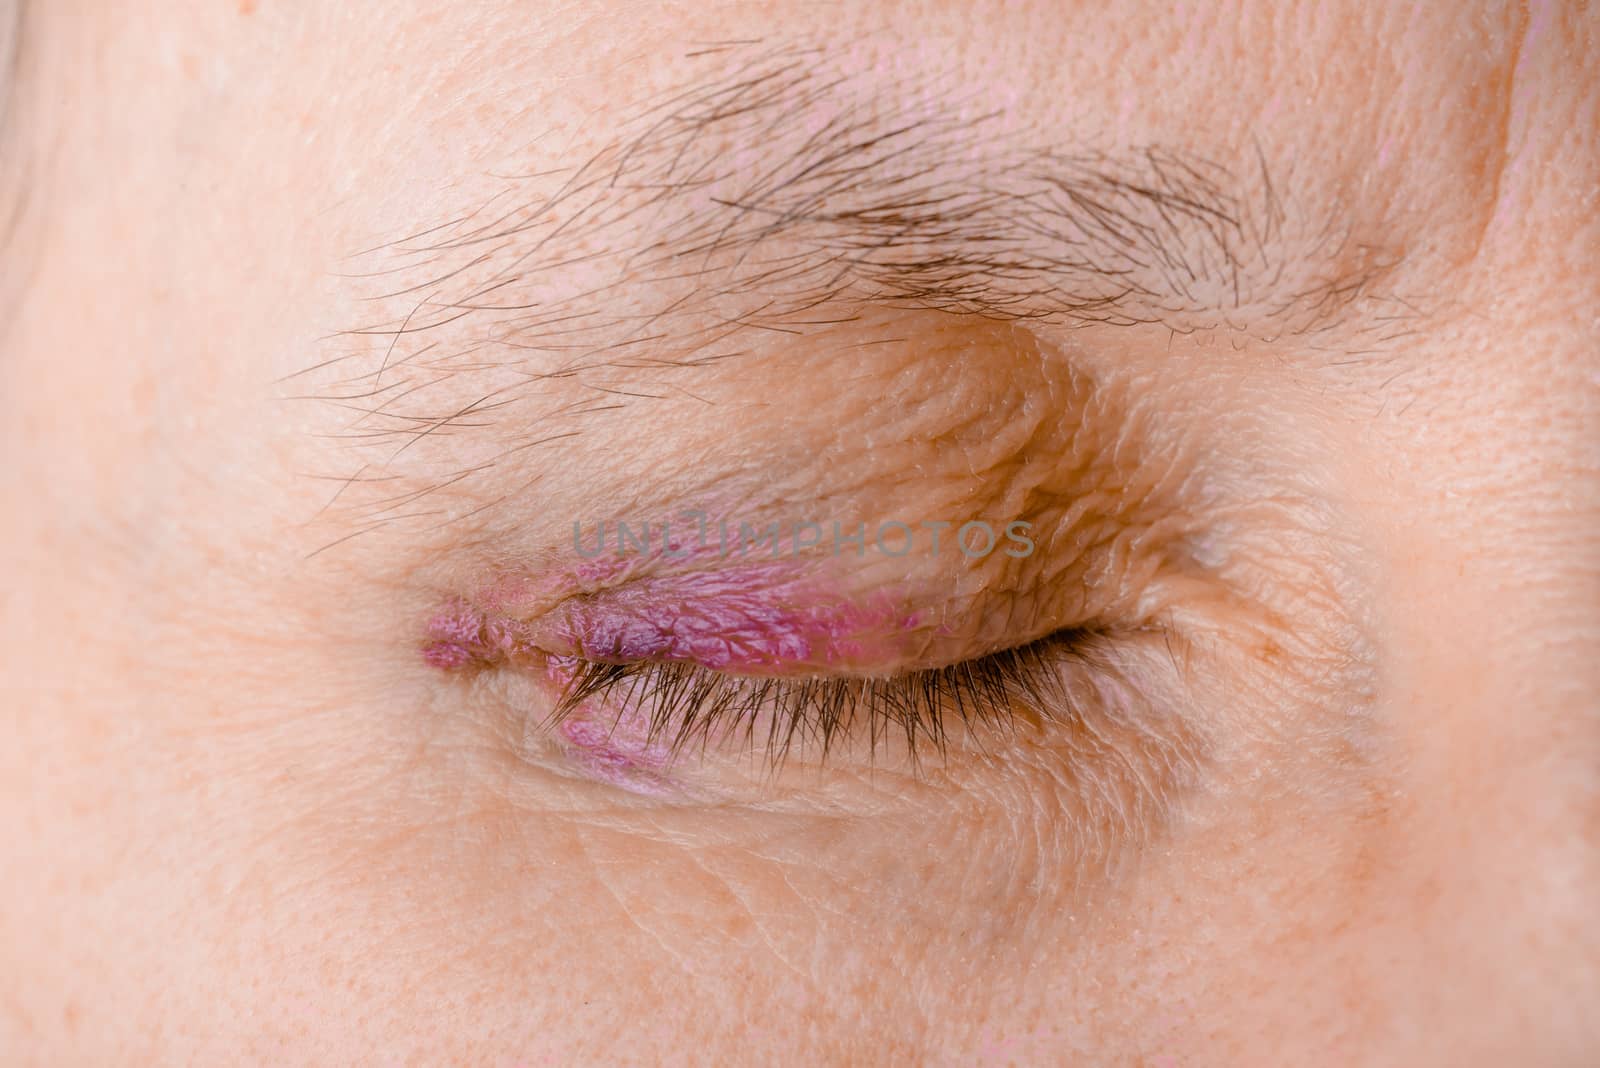 Injured eye due to capillary rupture by MaxalTamor